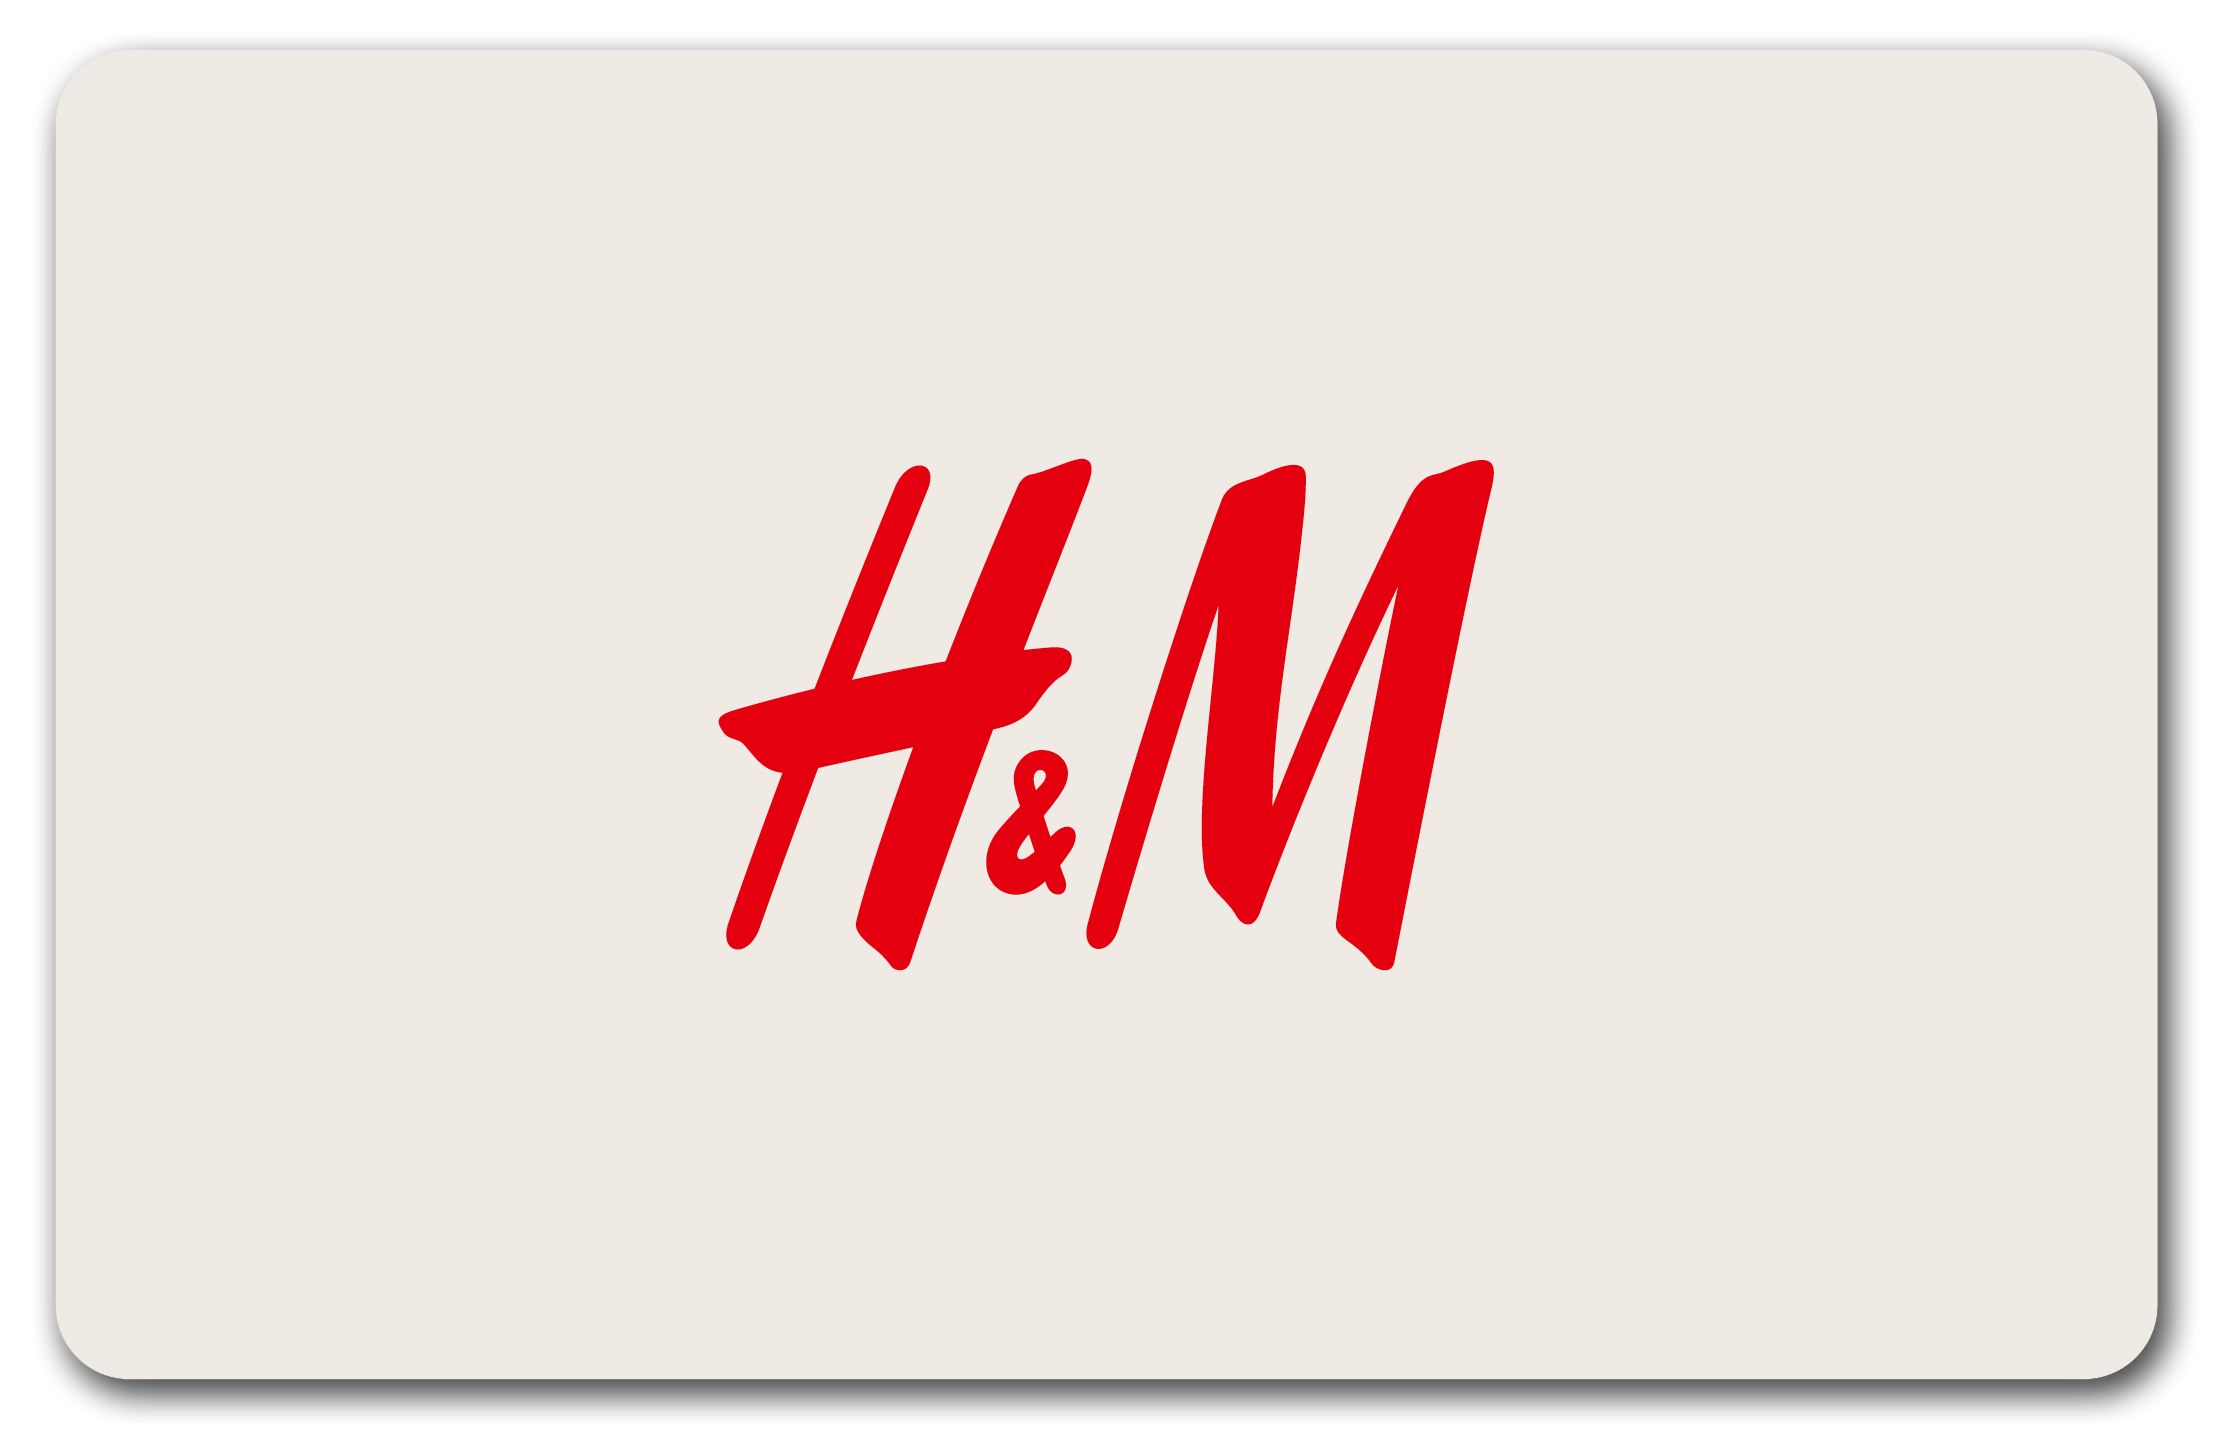 H&M Bègles